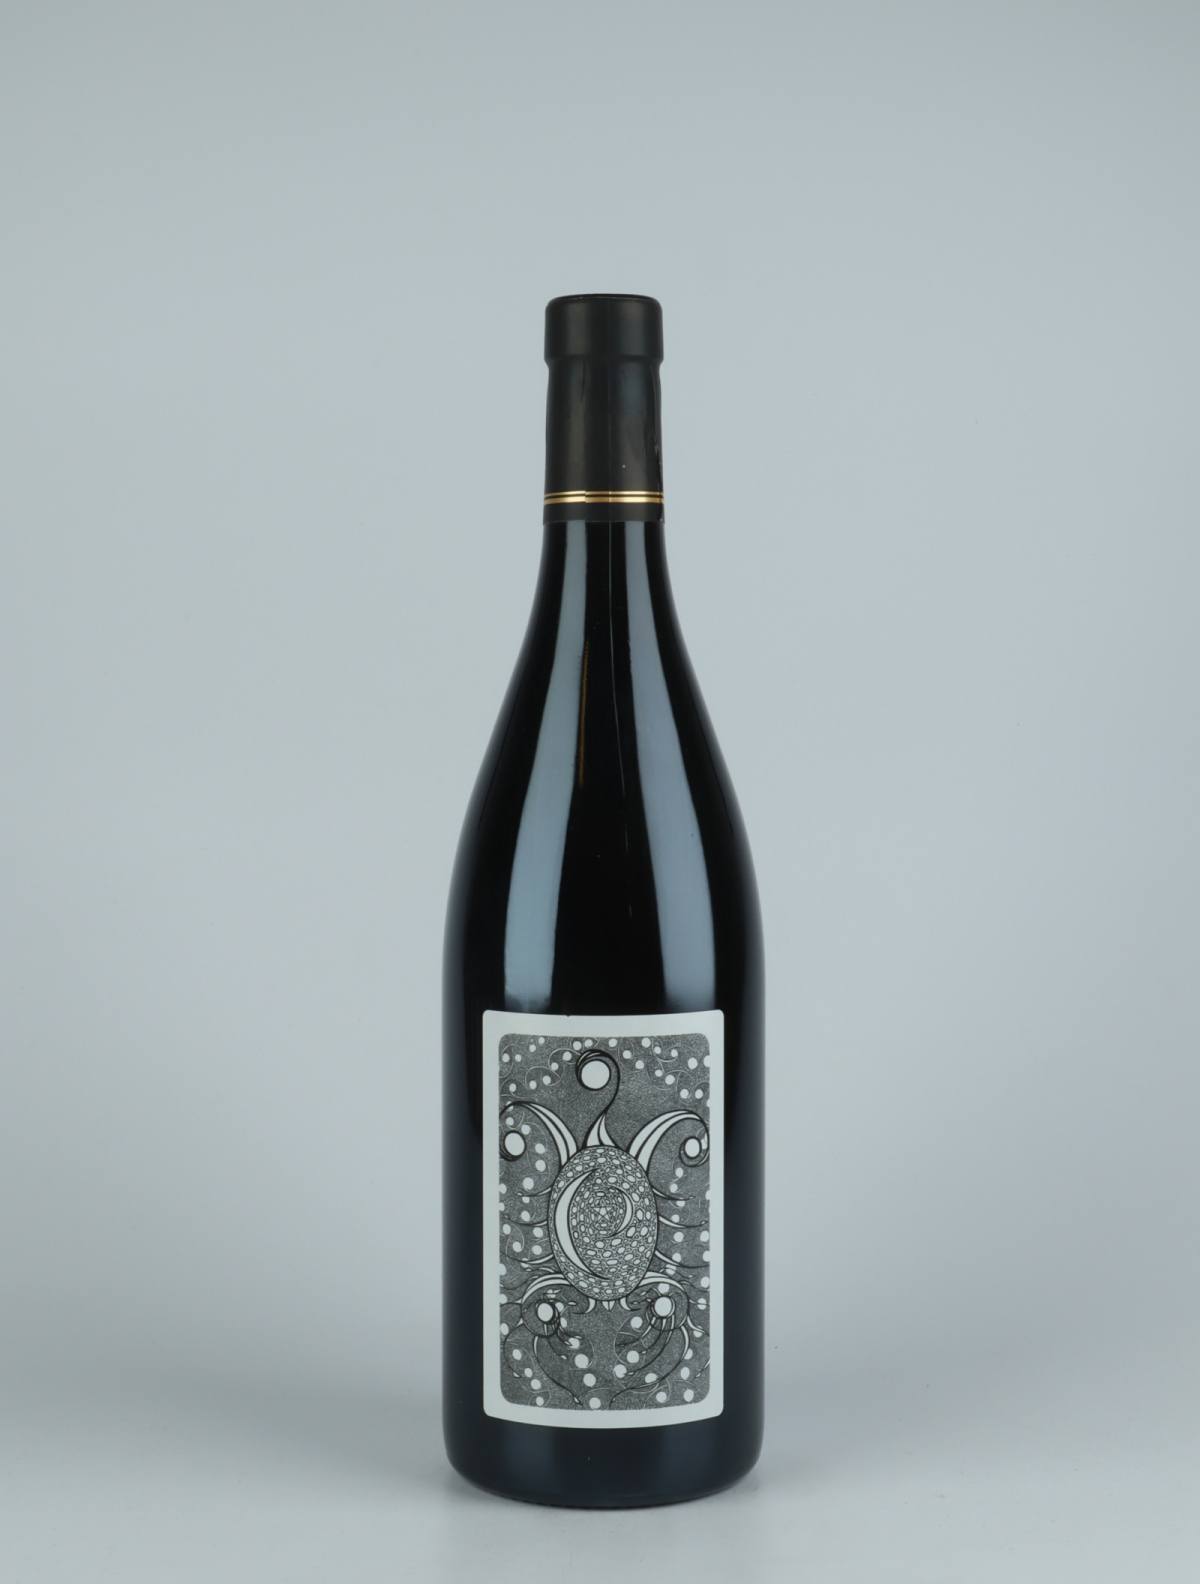 A bottle 2019 Elements Red wine from Julien Courtois, Loire in France